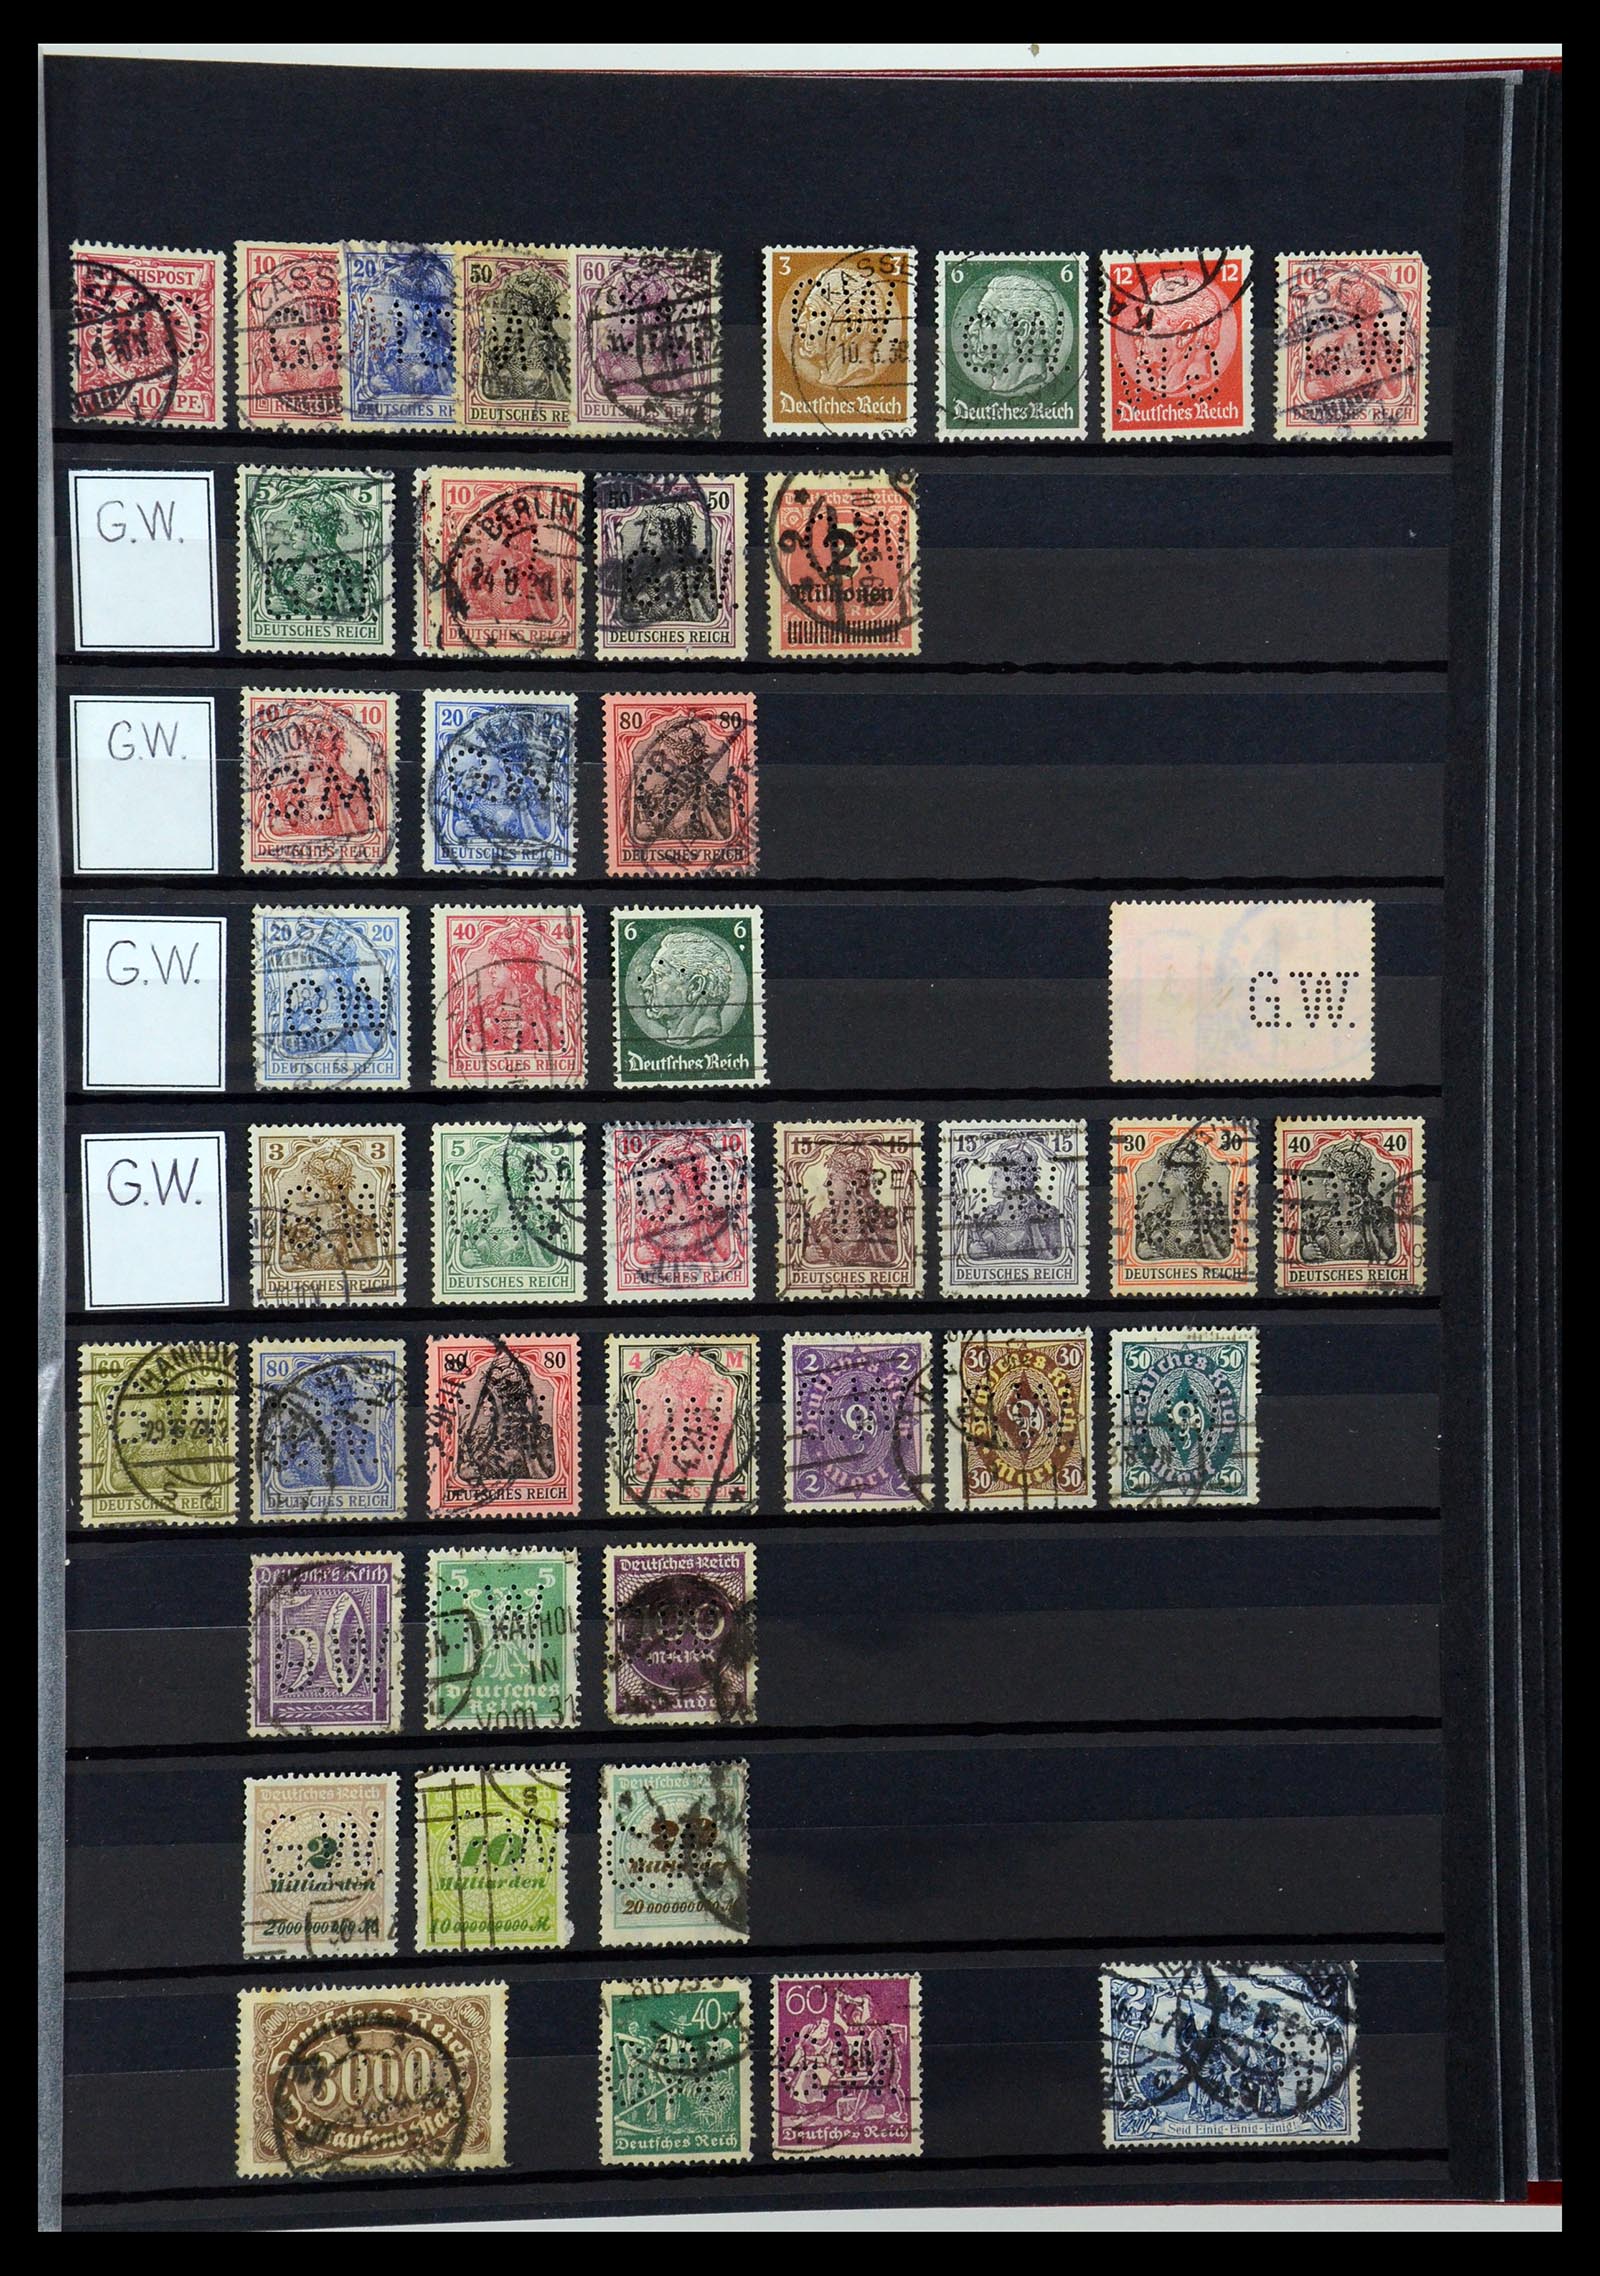 36405 163 - Postzegelverzameling 36405 Duitse Rijk perfins 1880-1945.